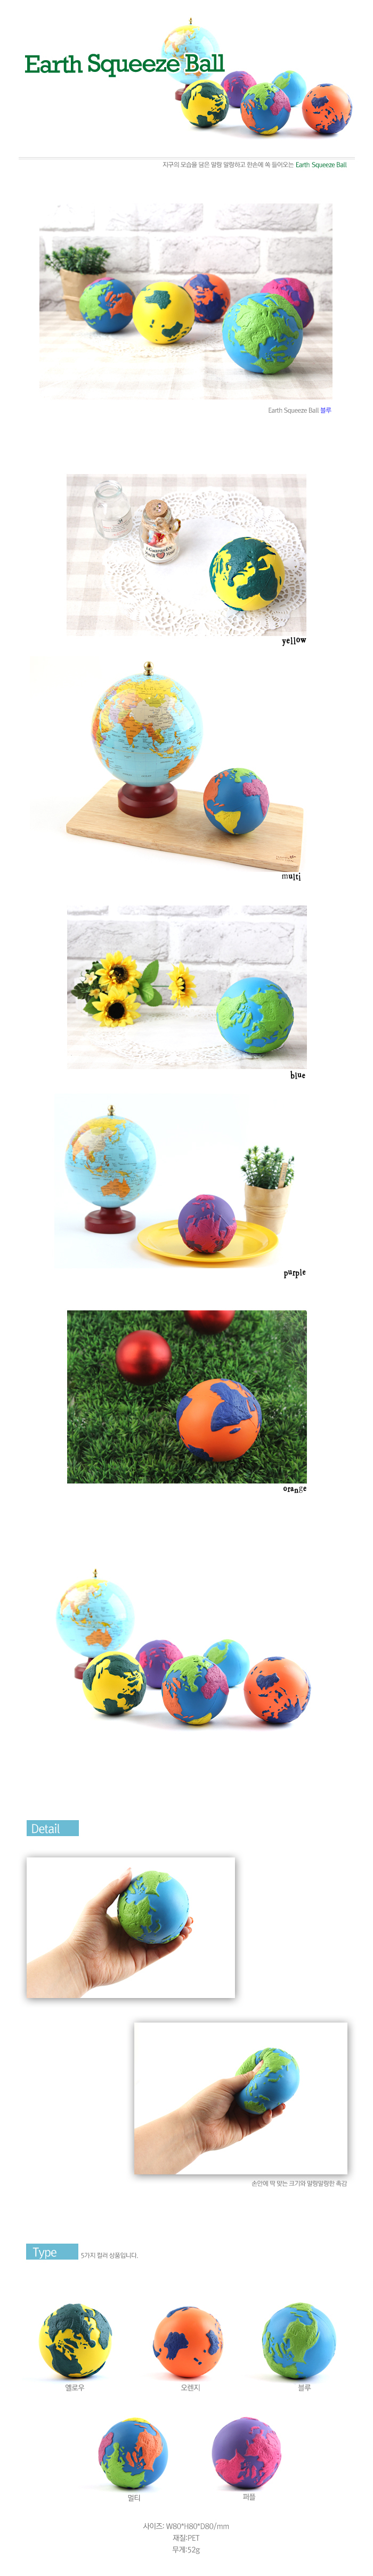 Earth Squeeze Ball-Blue(블루) 12,500원 - 소니엔젤 베이비/키즈, 유아완구/교구, 미술놀이, 미술교구 바보사랑 Earth Squeeze Ball-Blue(블루) 12,500원 - 소니엔젤 베이비/키즈, 유아완구/교구, 미술놀이, 미술교구 바보사랑